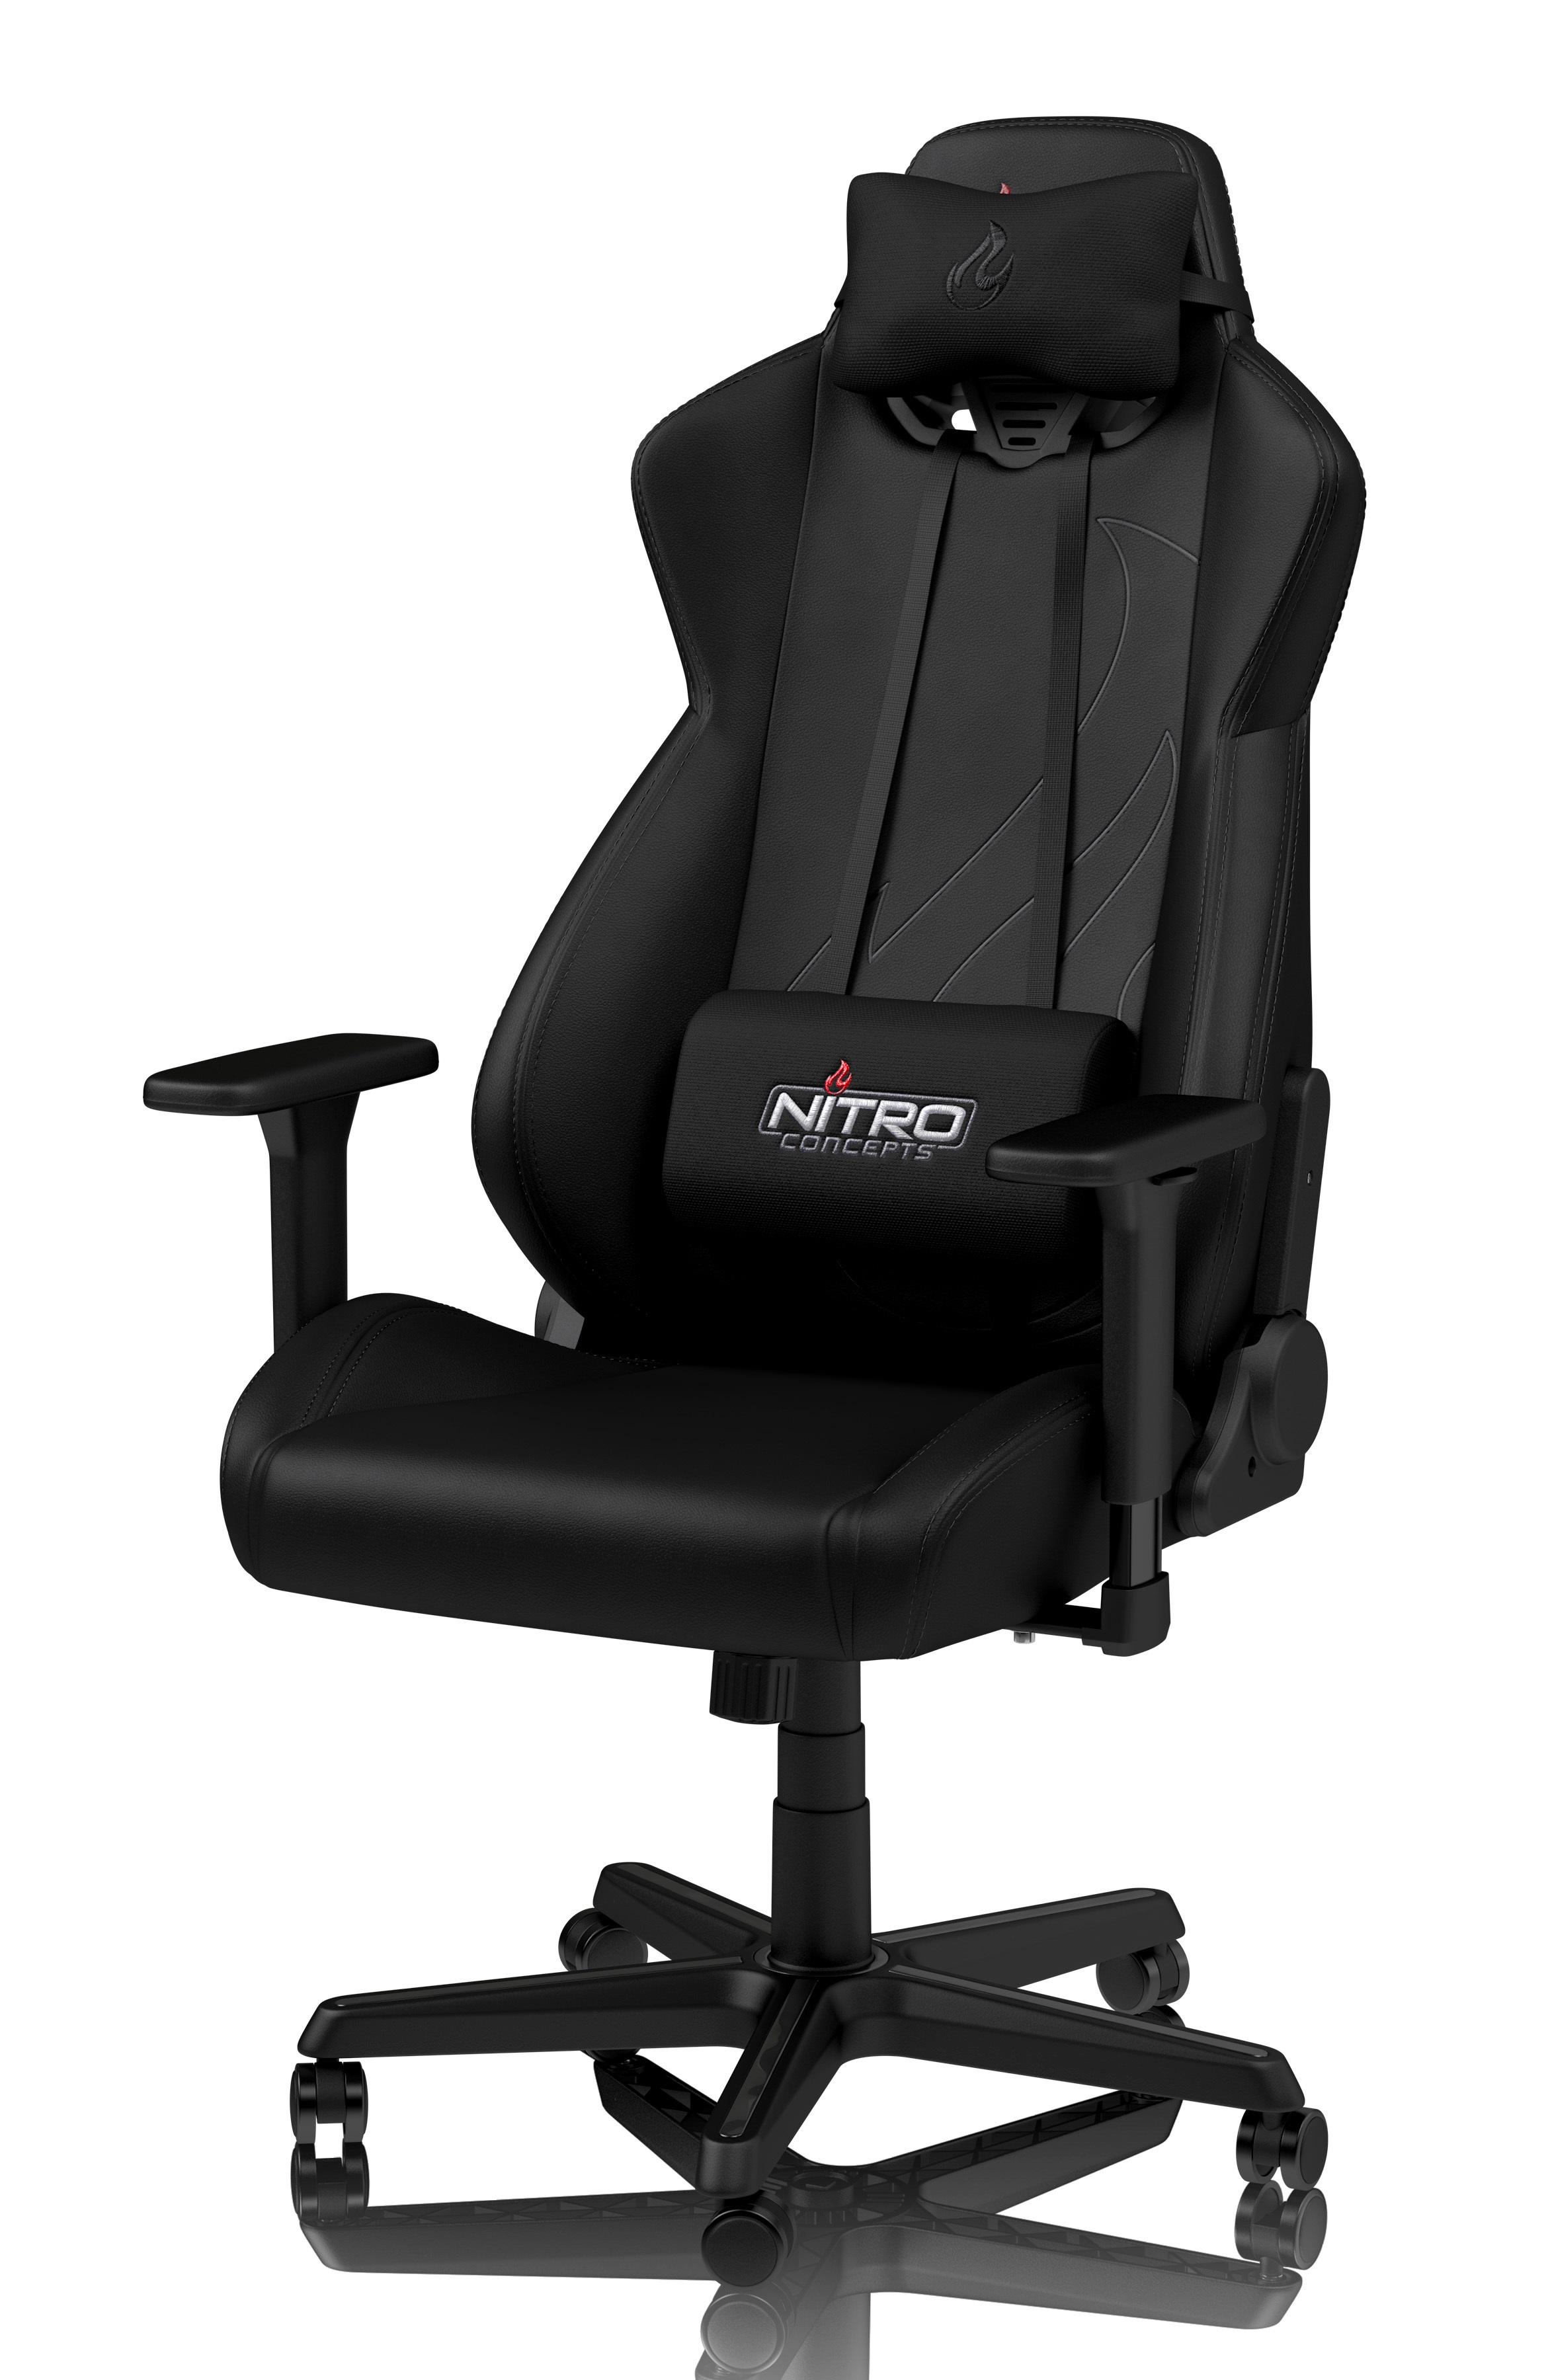 Nitro Concepts - Nitro Concepts S300 EX Gaming Chair - Stealth Black